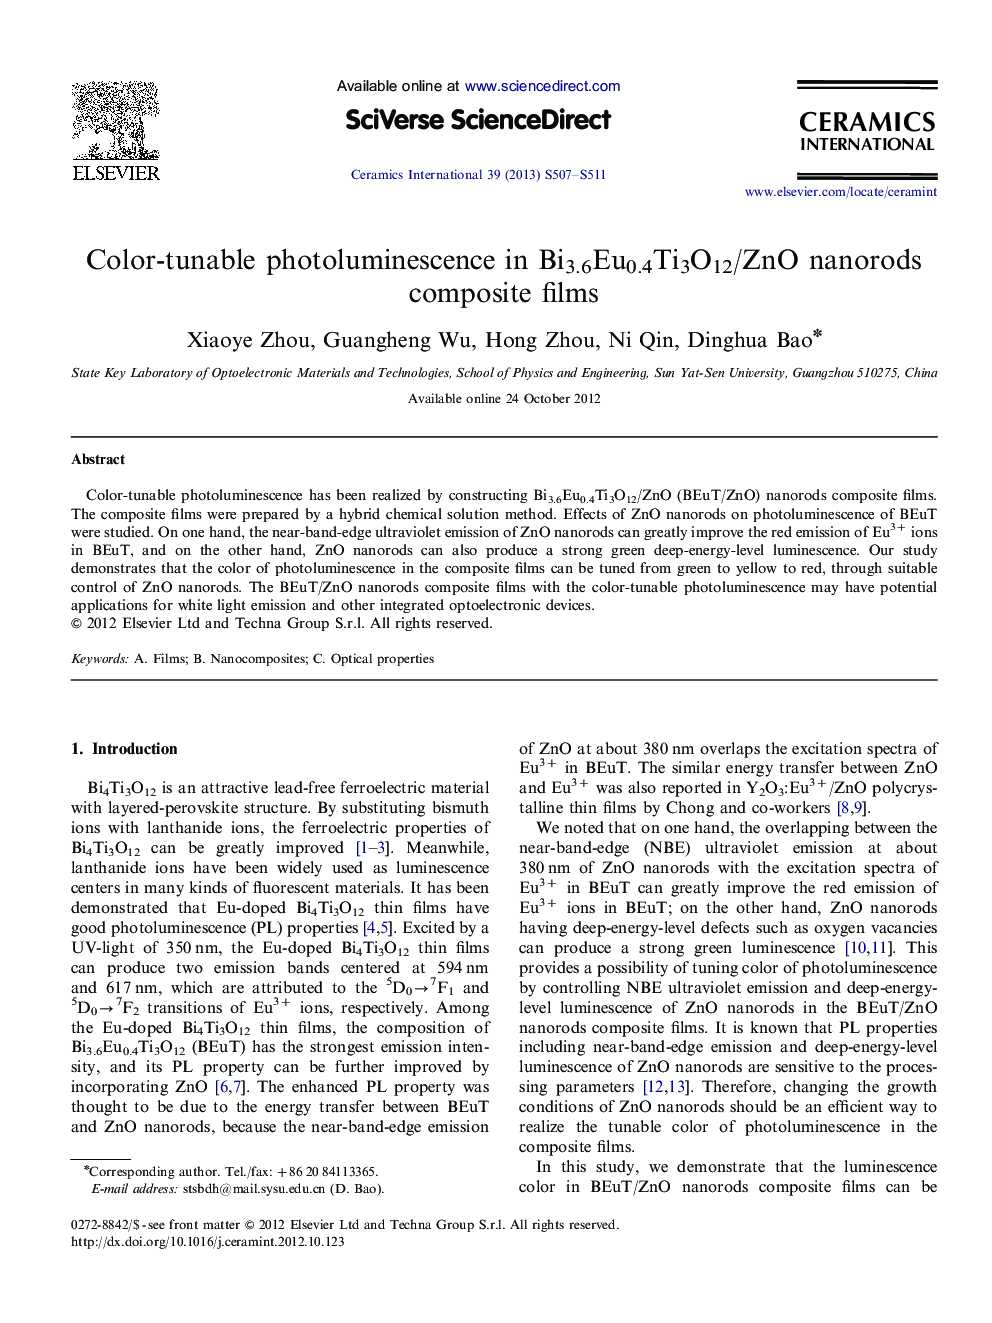 Color-tunable photoluminescence in Bi3.6Eu0.4Ti3O12/ZnO nanorods composite films